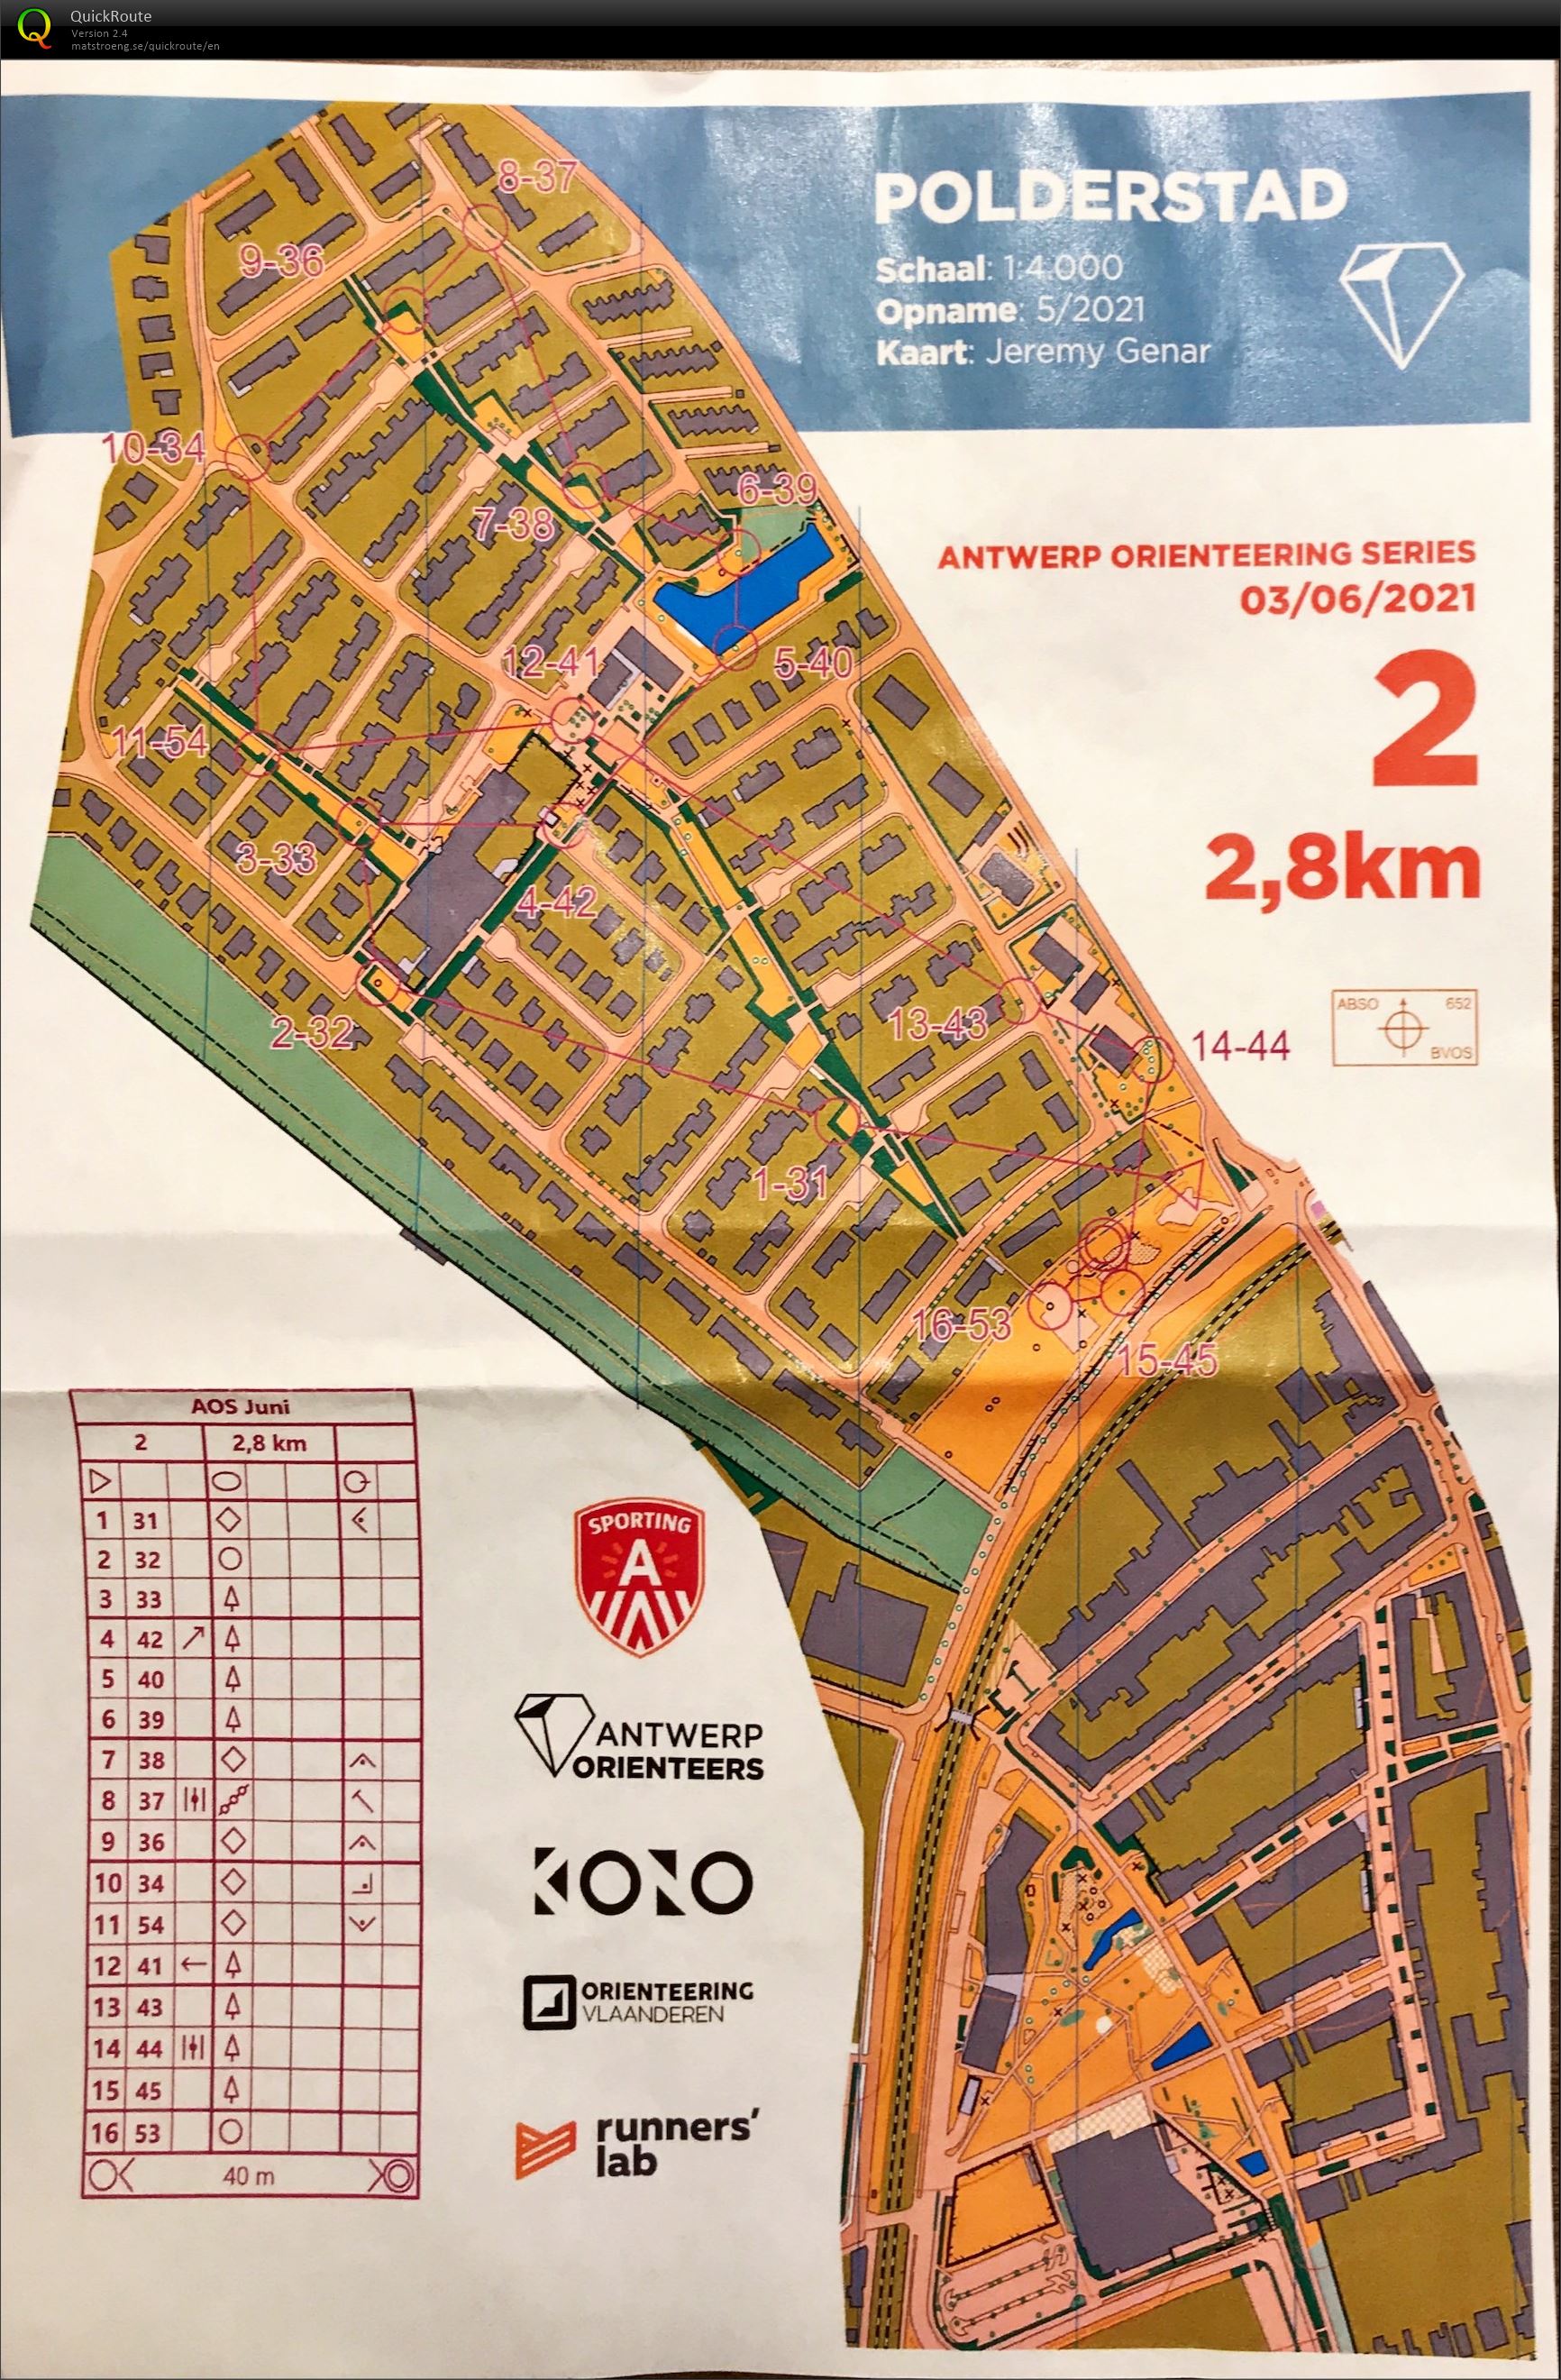 Antwerp Orienteering Series - Polderstad - 2.8K (2021-06-03)